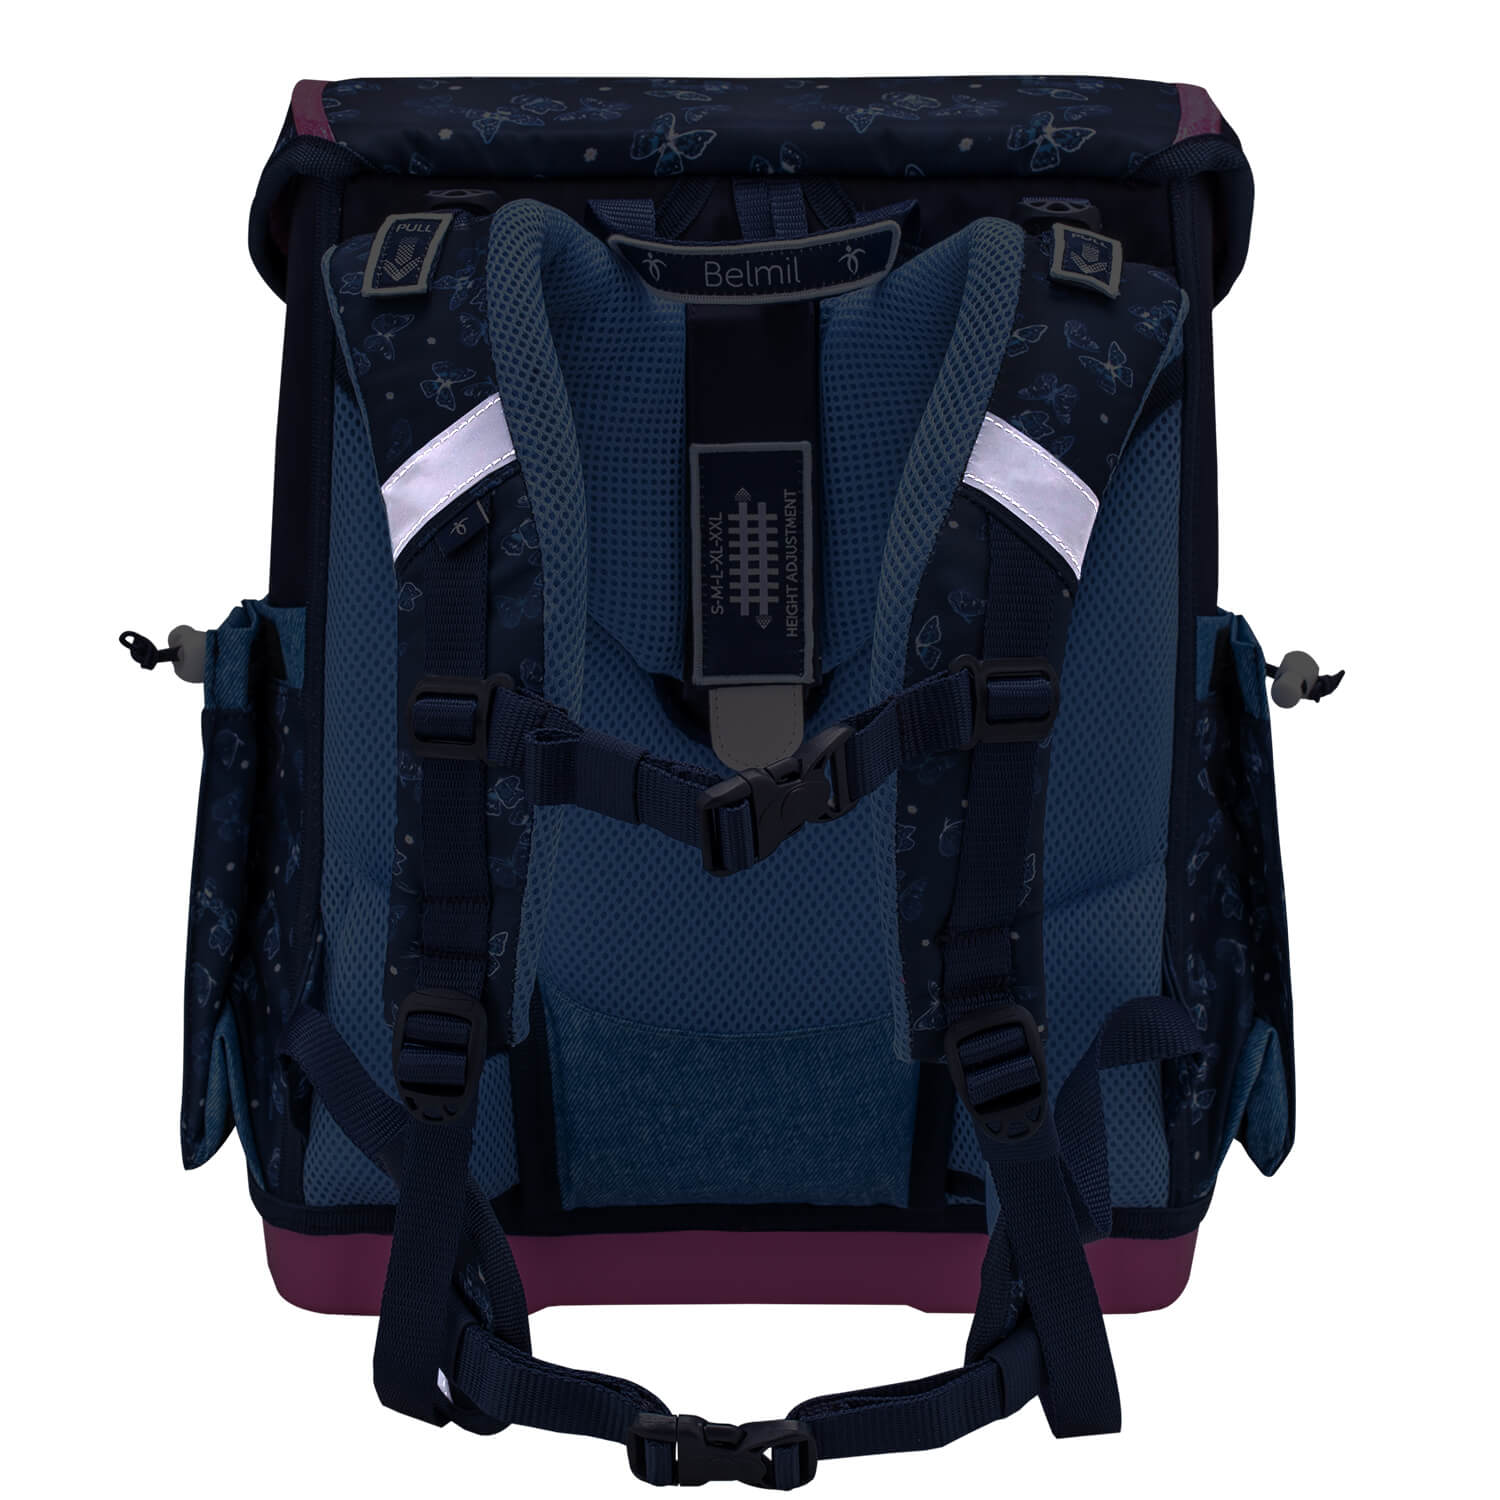 Premium Compact Plus Sapphire Schoolbag